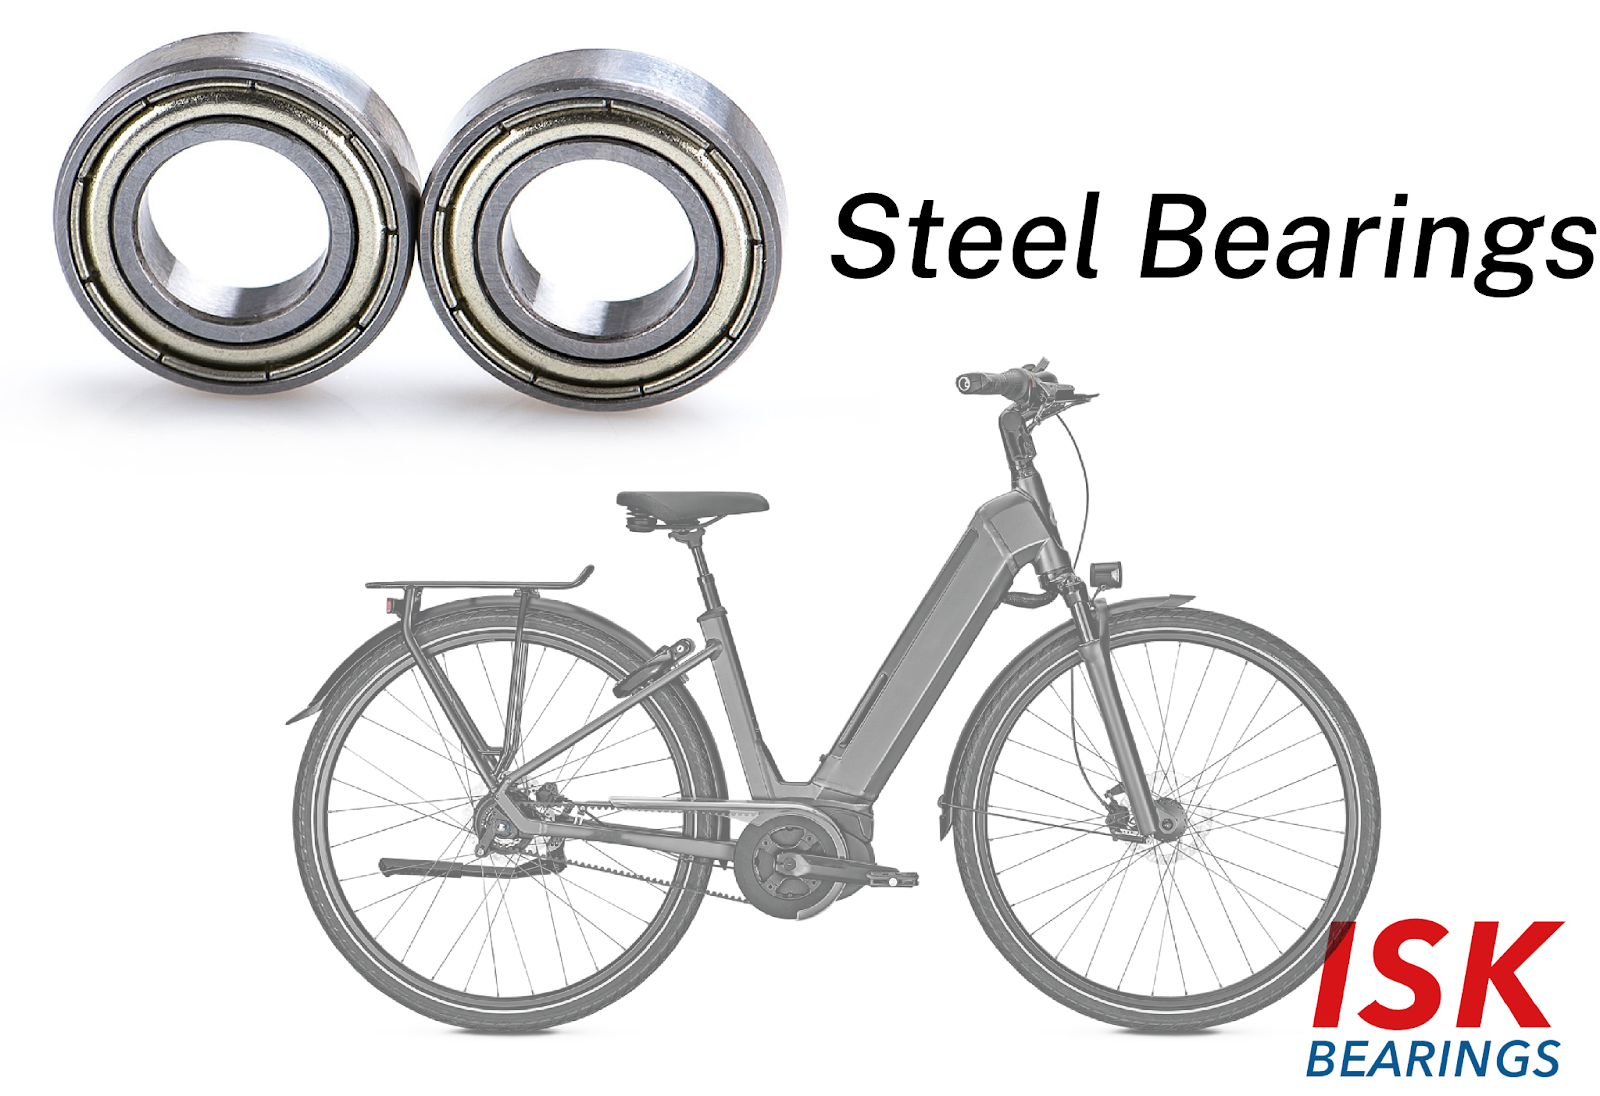 Steel Bearings for bicycles